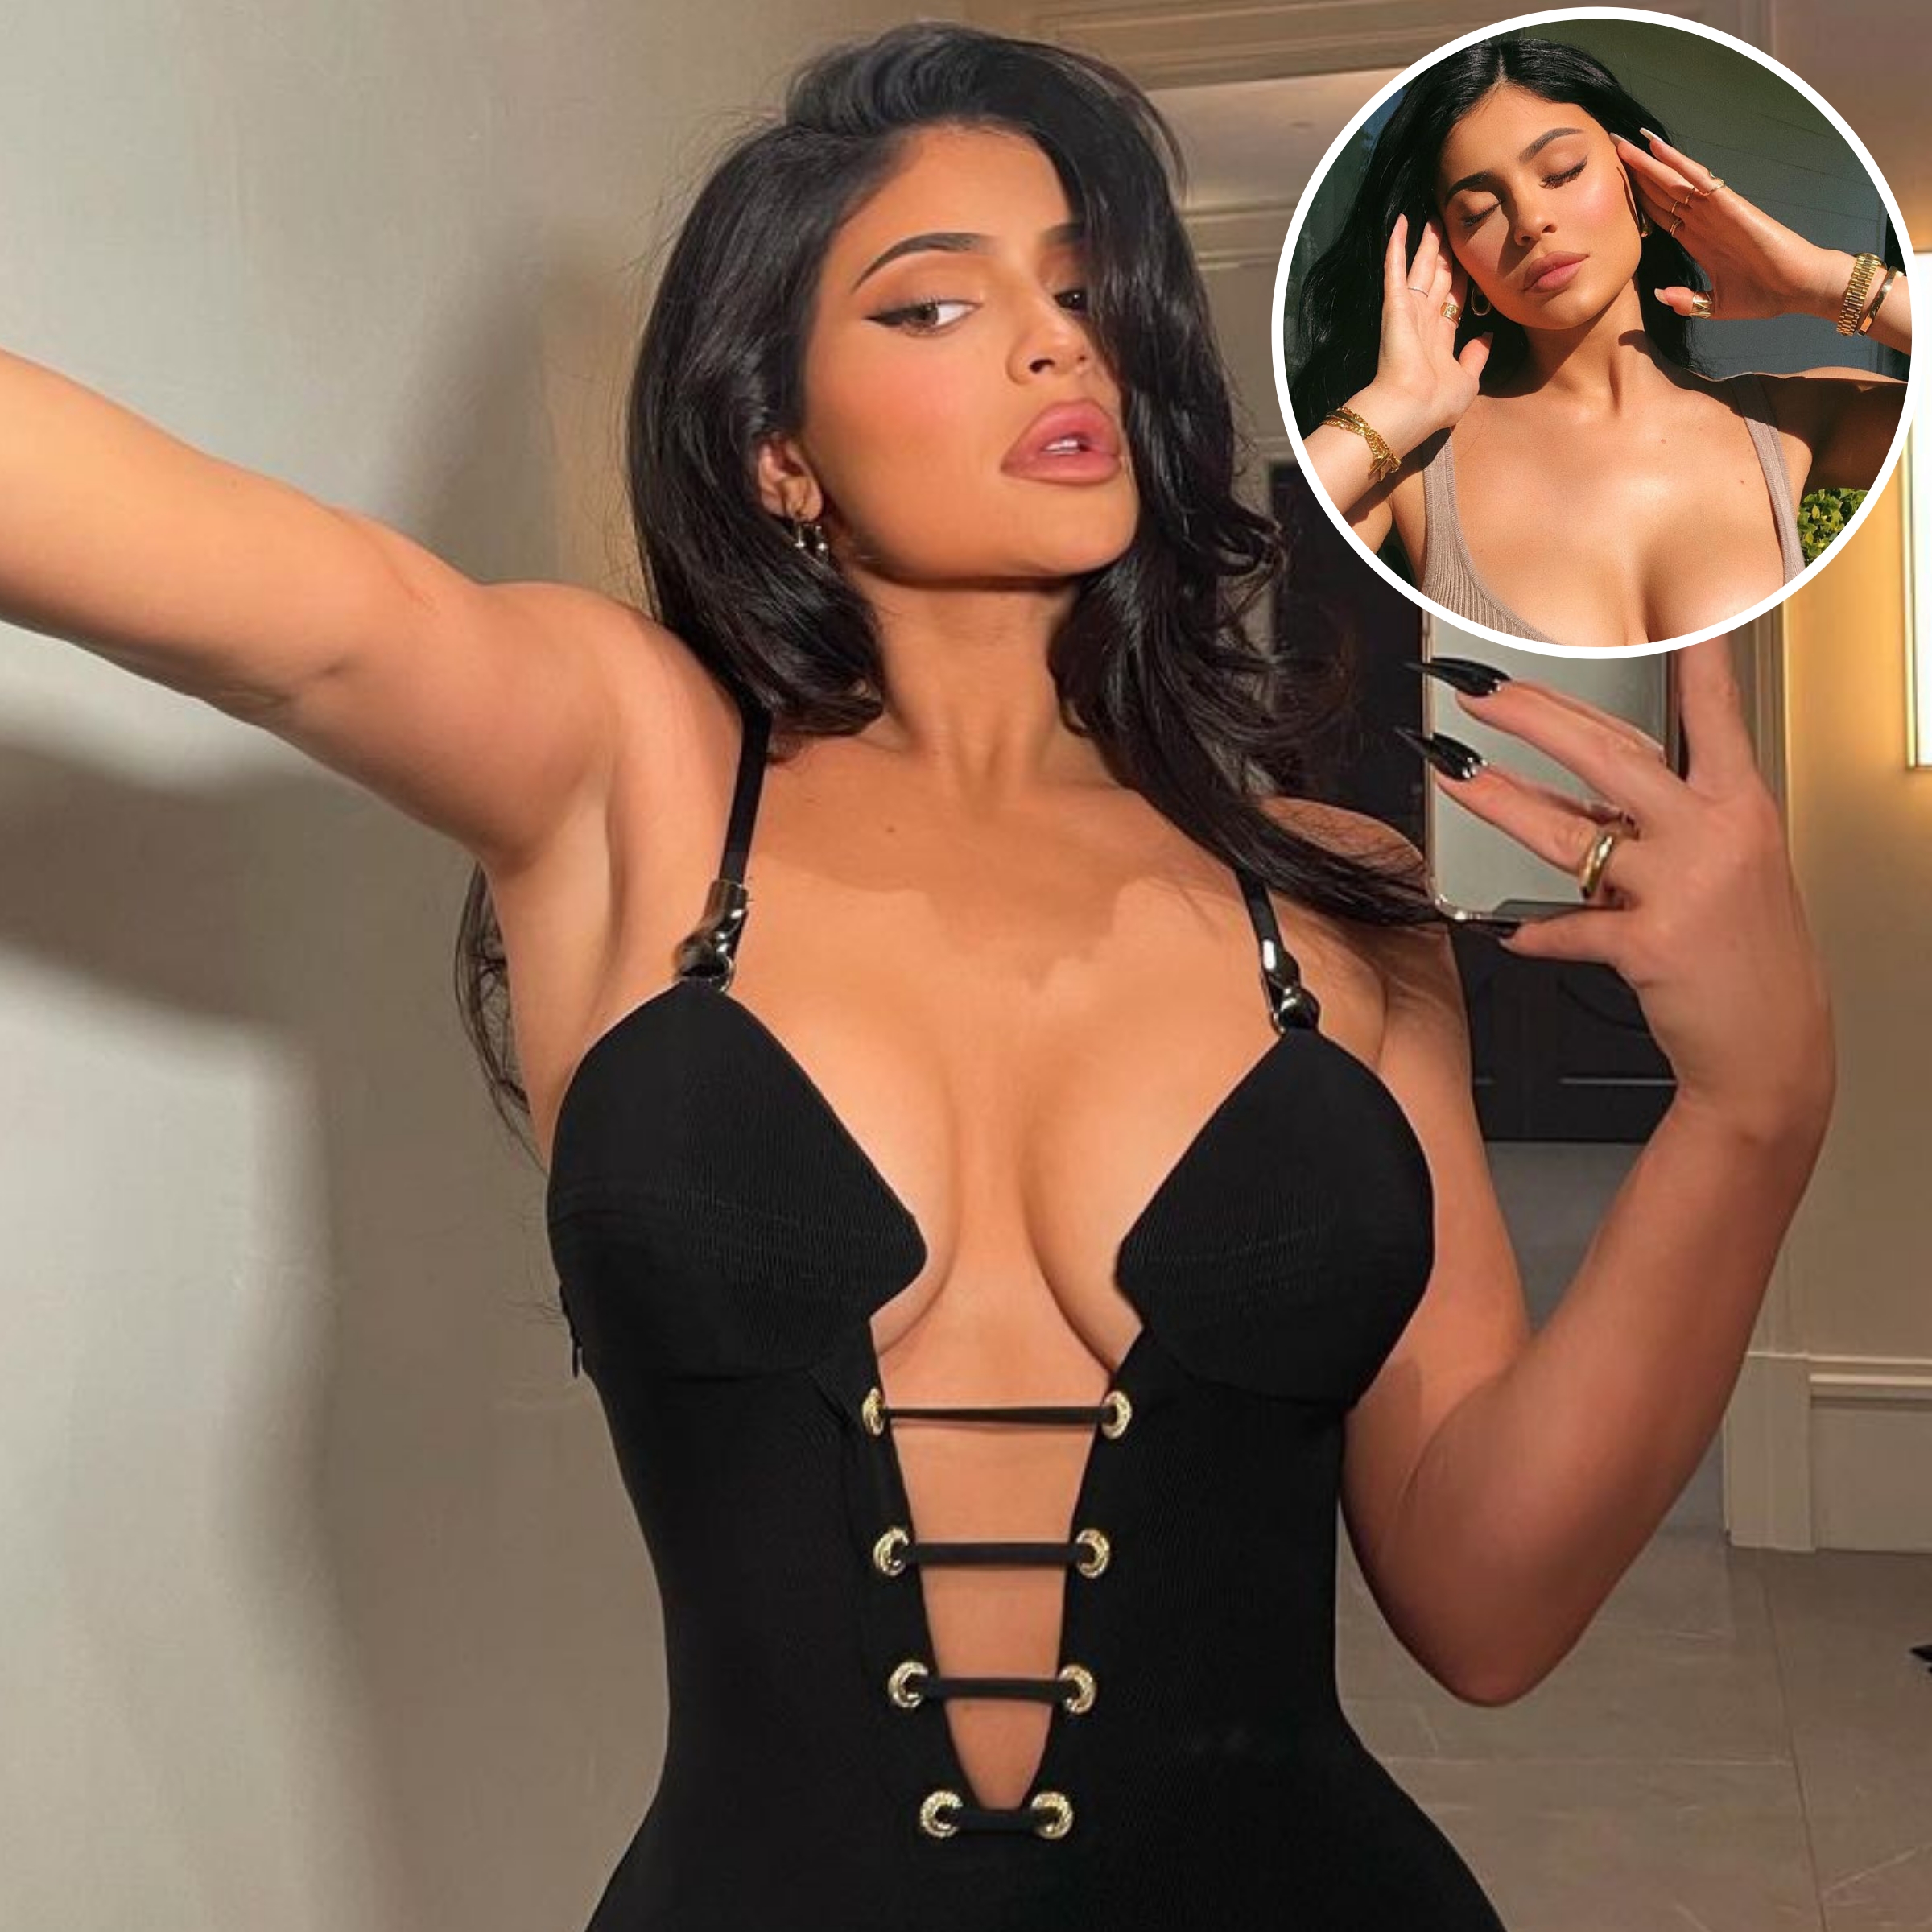 bhagwan manwani recommends Kylie Jenners Nipples